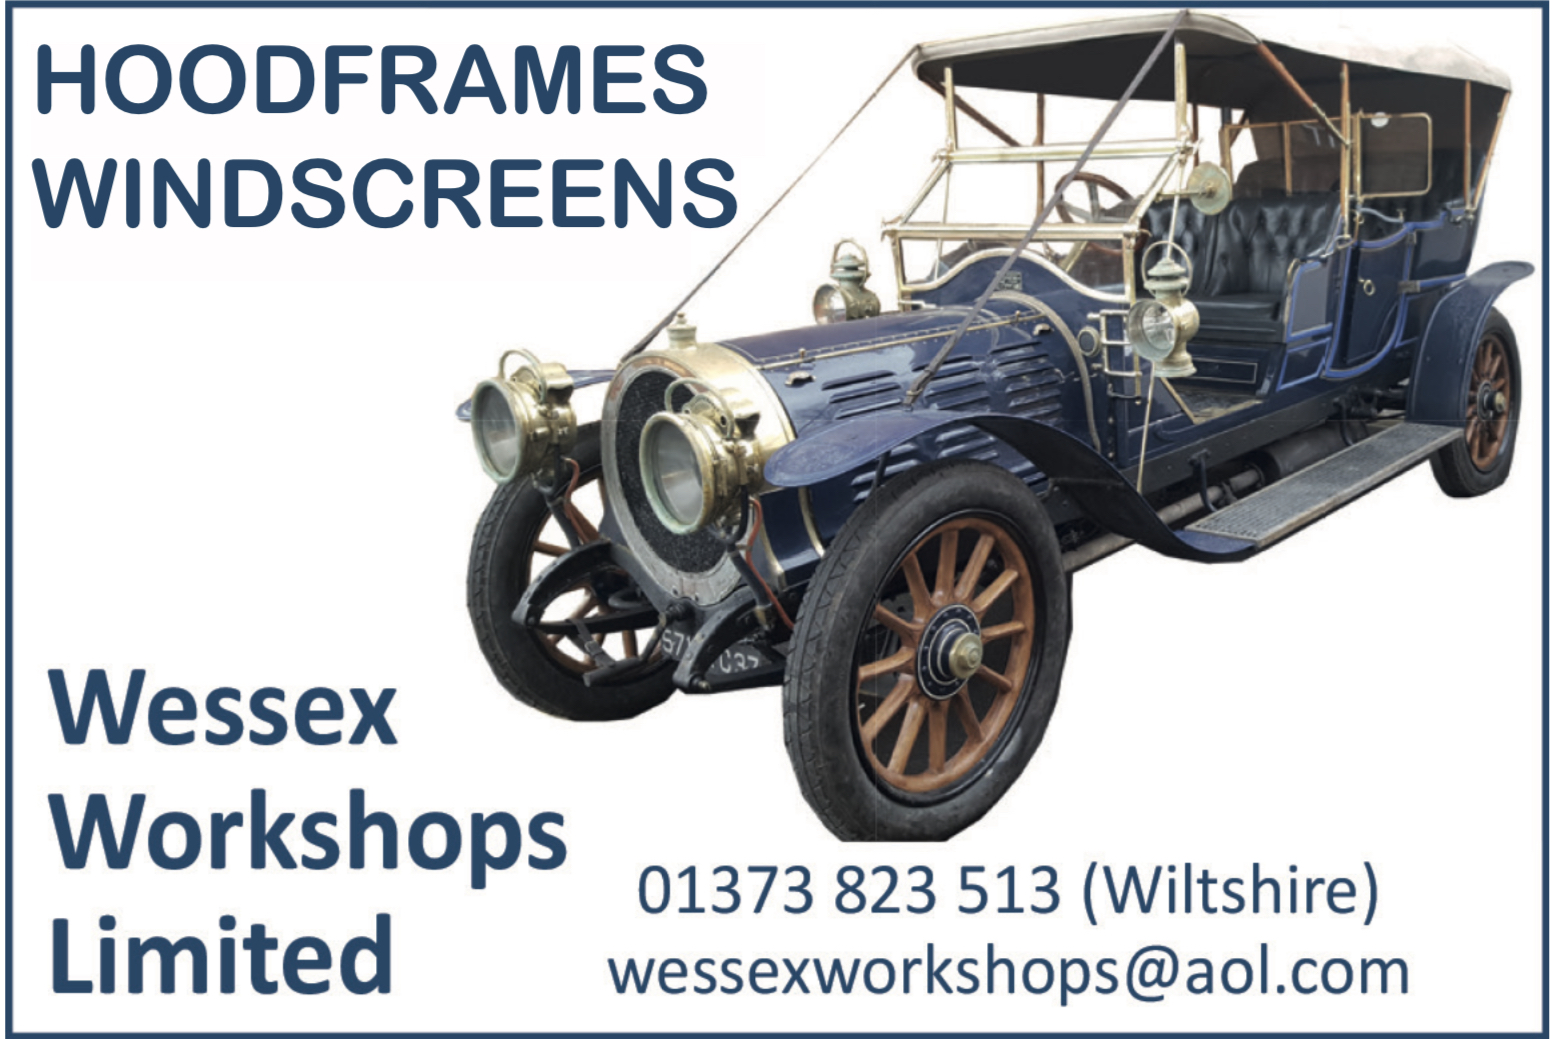 Wessex Workshops - Hoodframes and windscreens